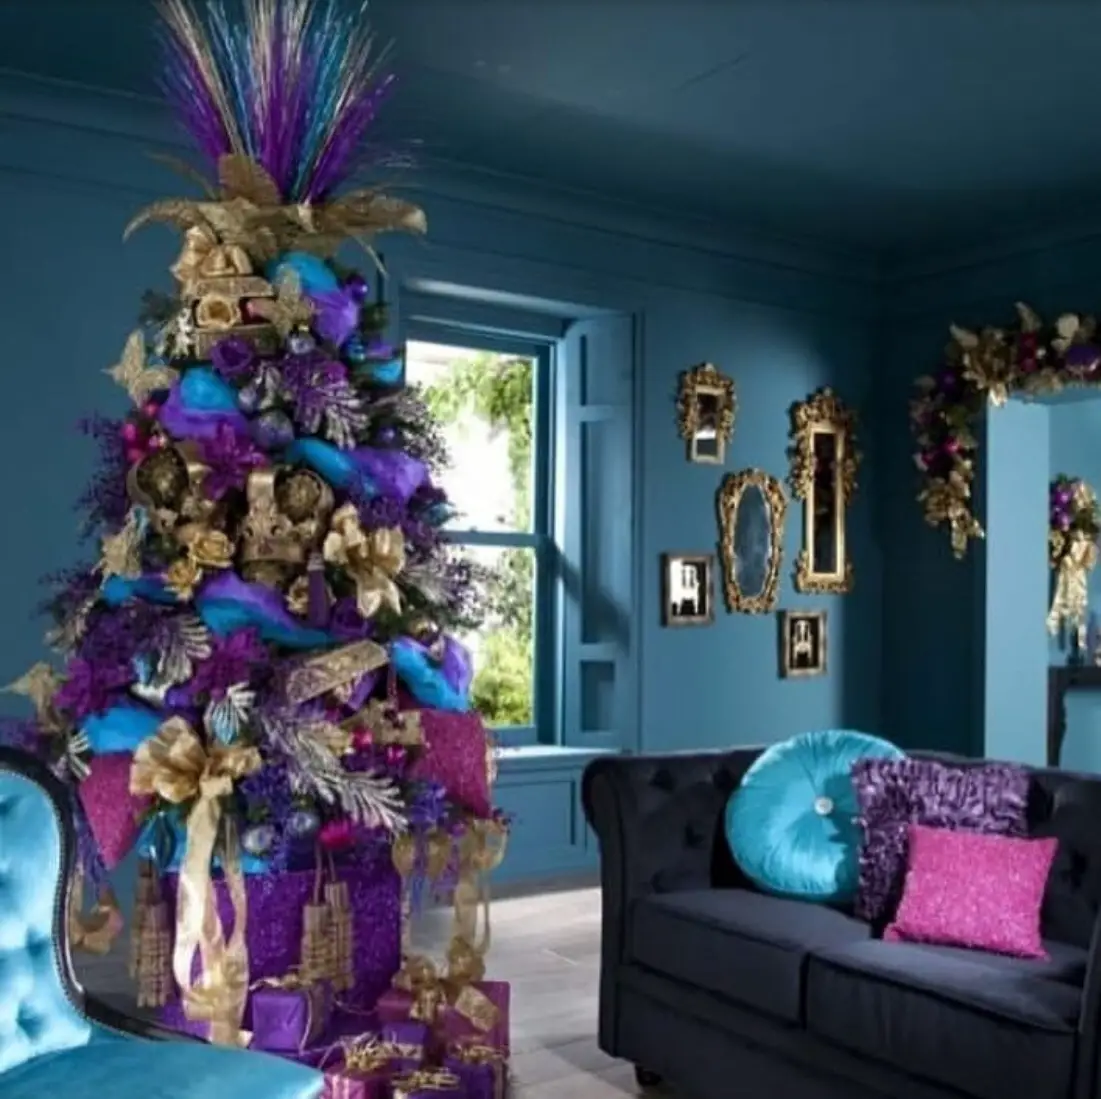 Purple Christmas Decorations